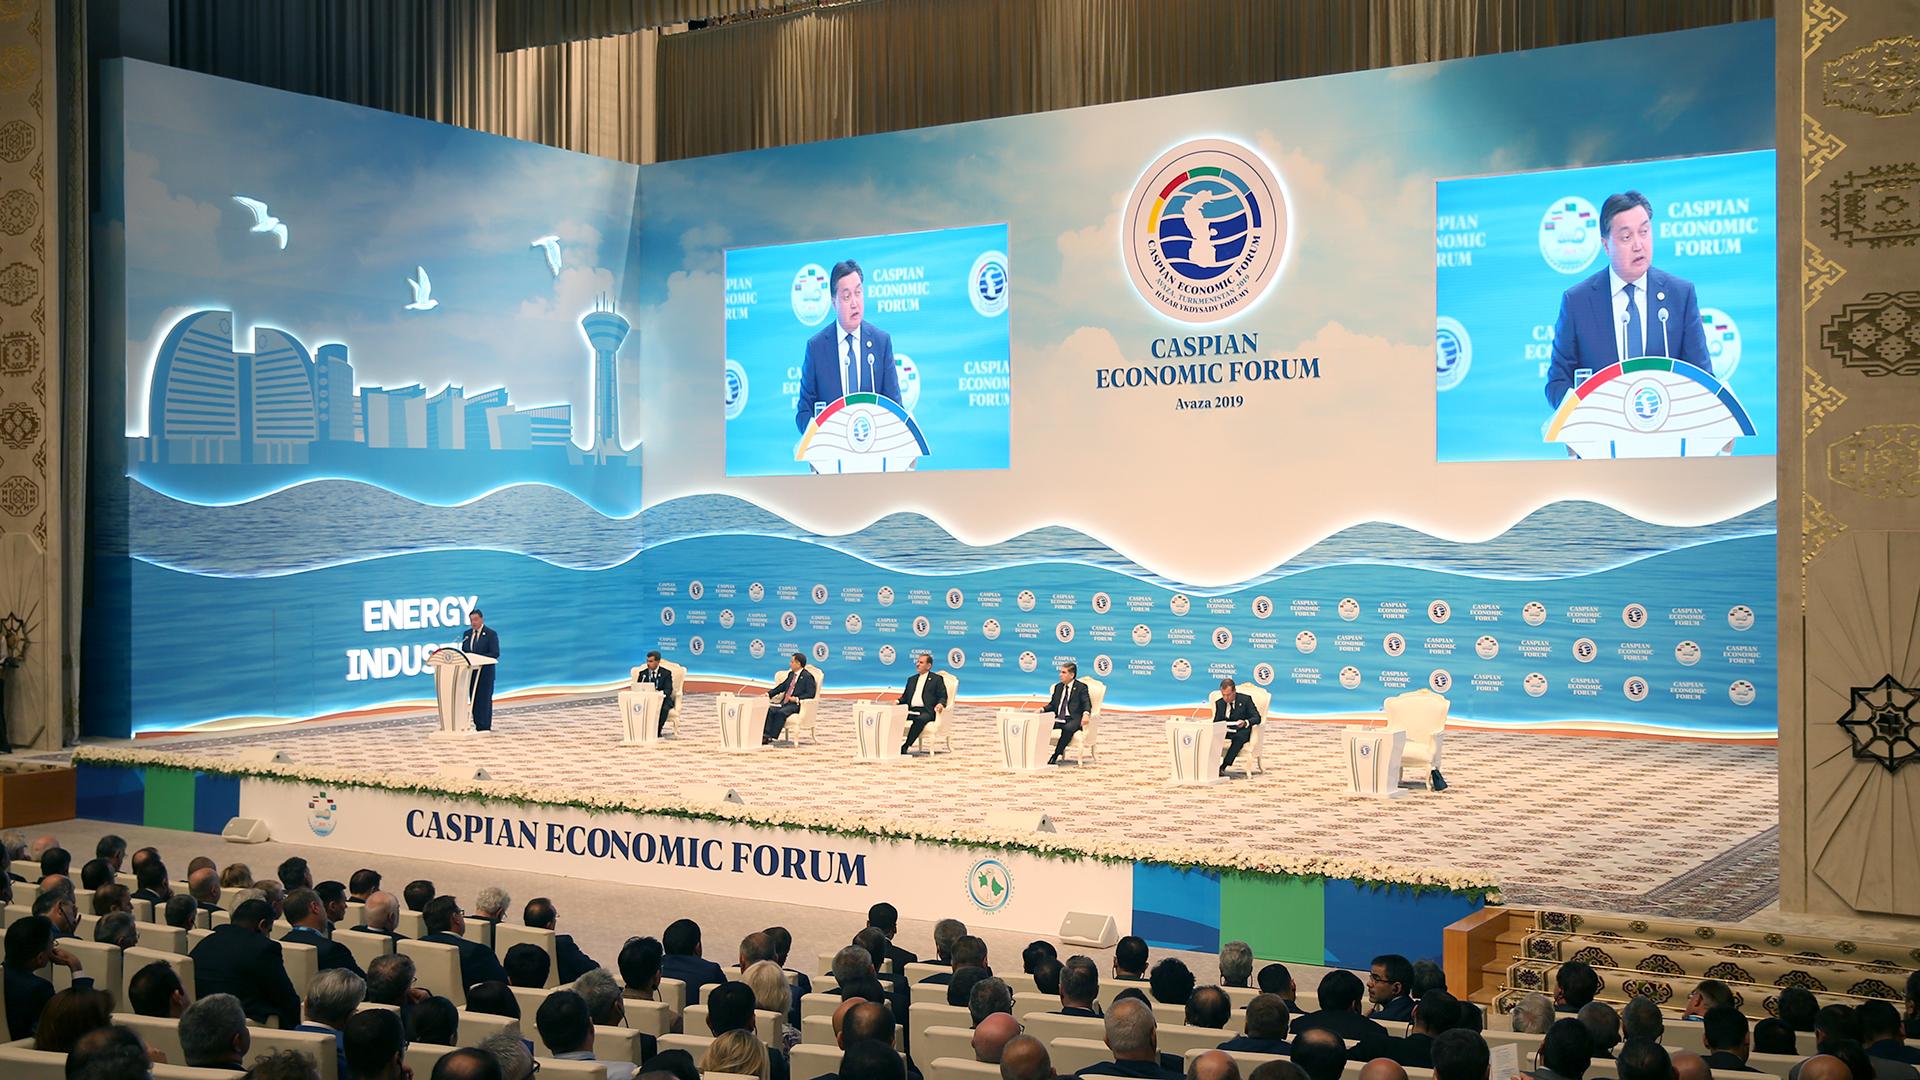 ARBZ took part in the Caspian Economic Forum in Turkmenistan